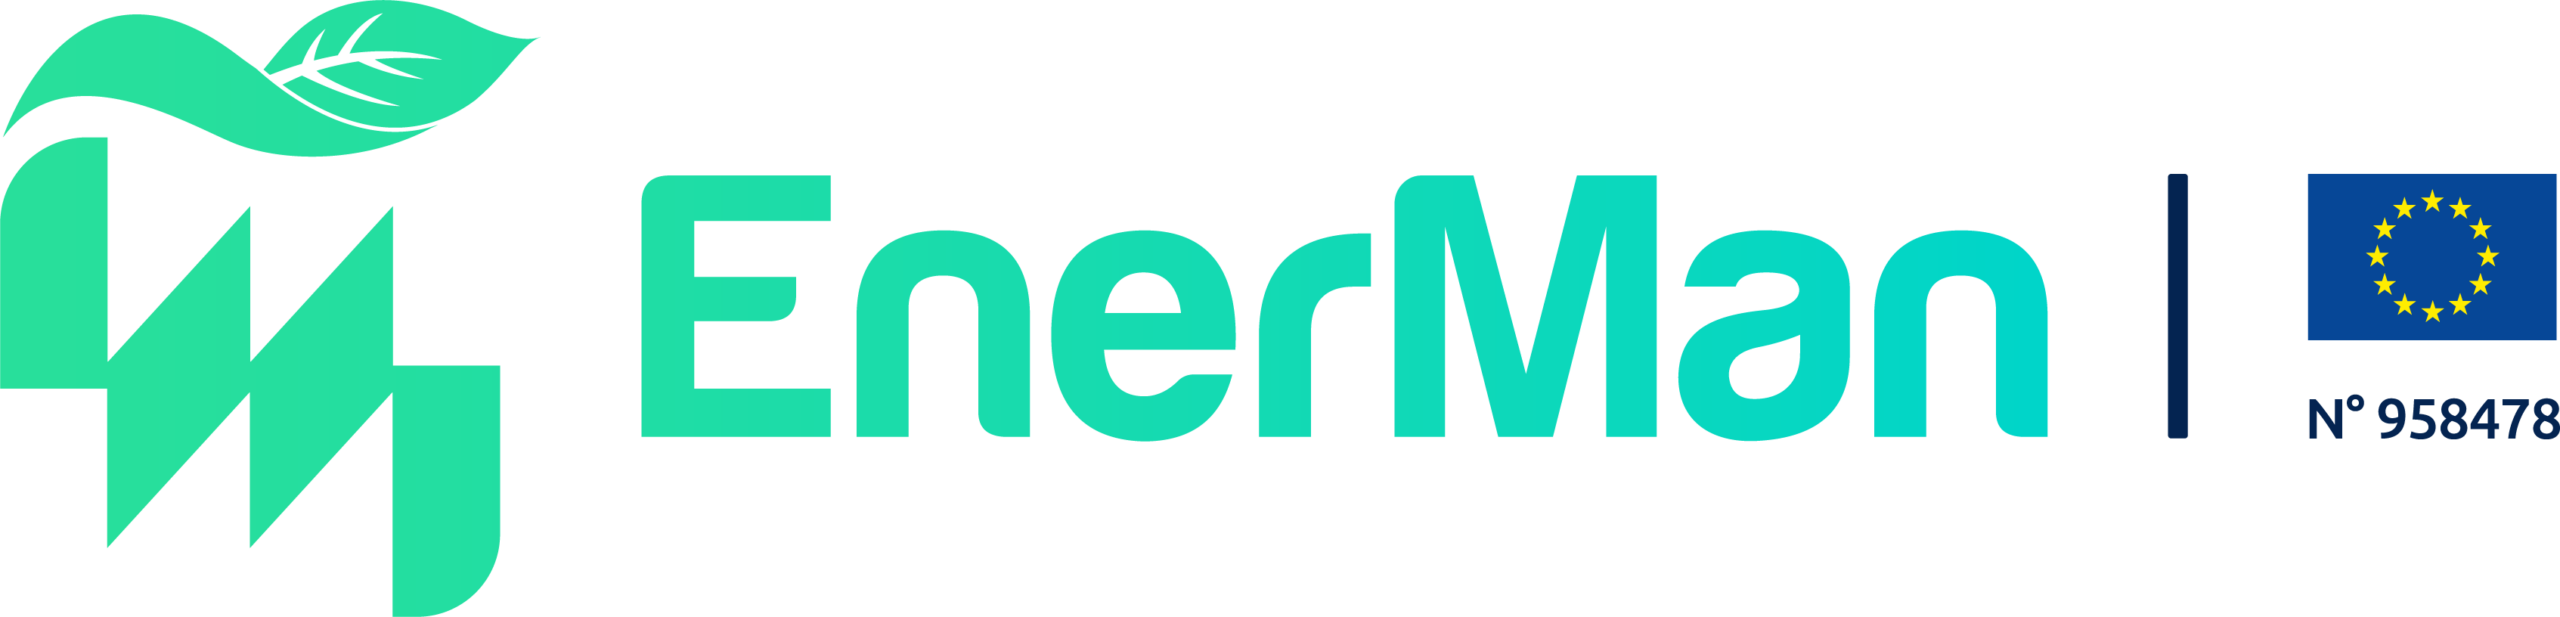 ENERMAN_Logo